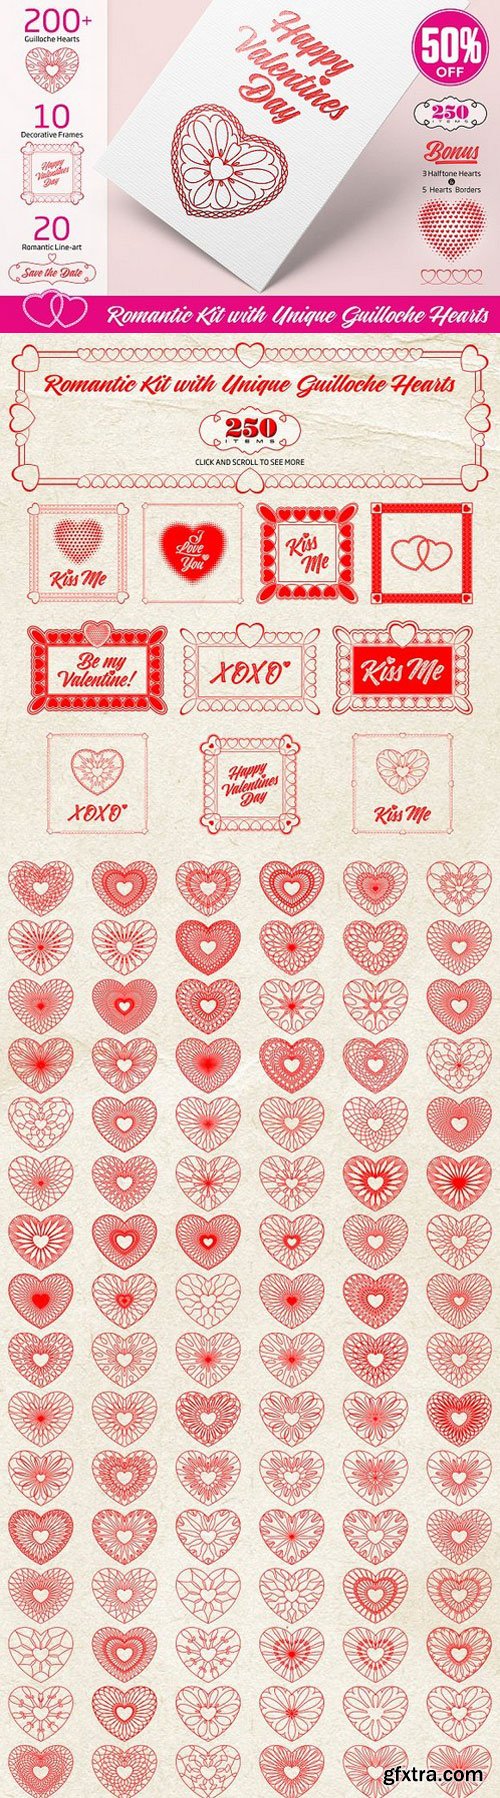 CM - Romantic Kit with Guilloche Hearts 1222938